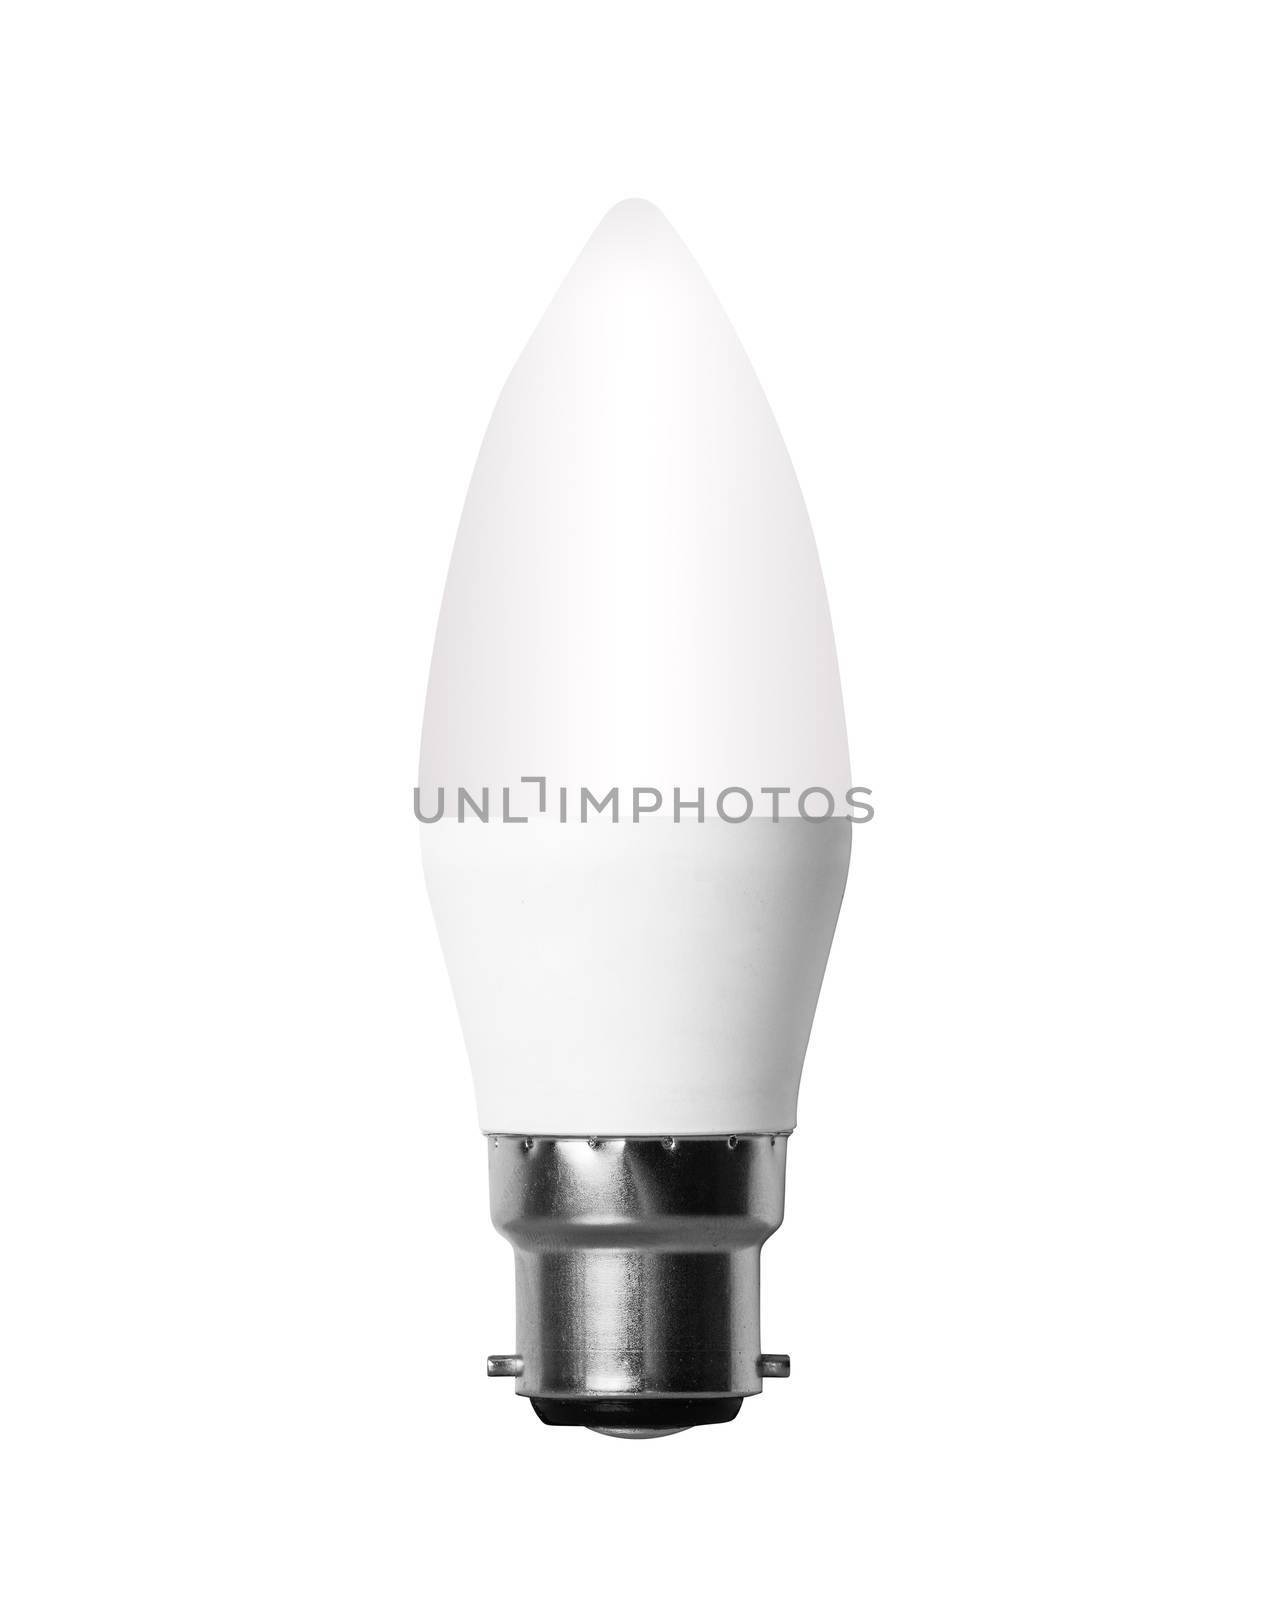 Isolated cutout LED candle bulb with UK B22 bayonet fitting and set against white background